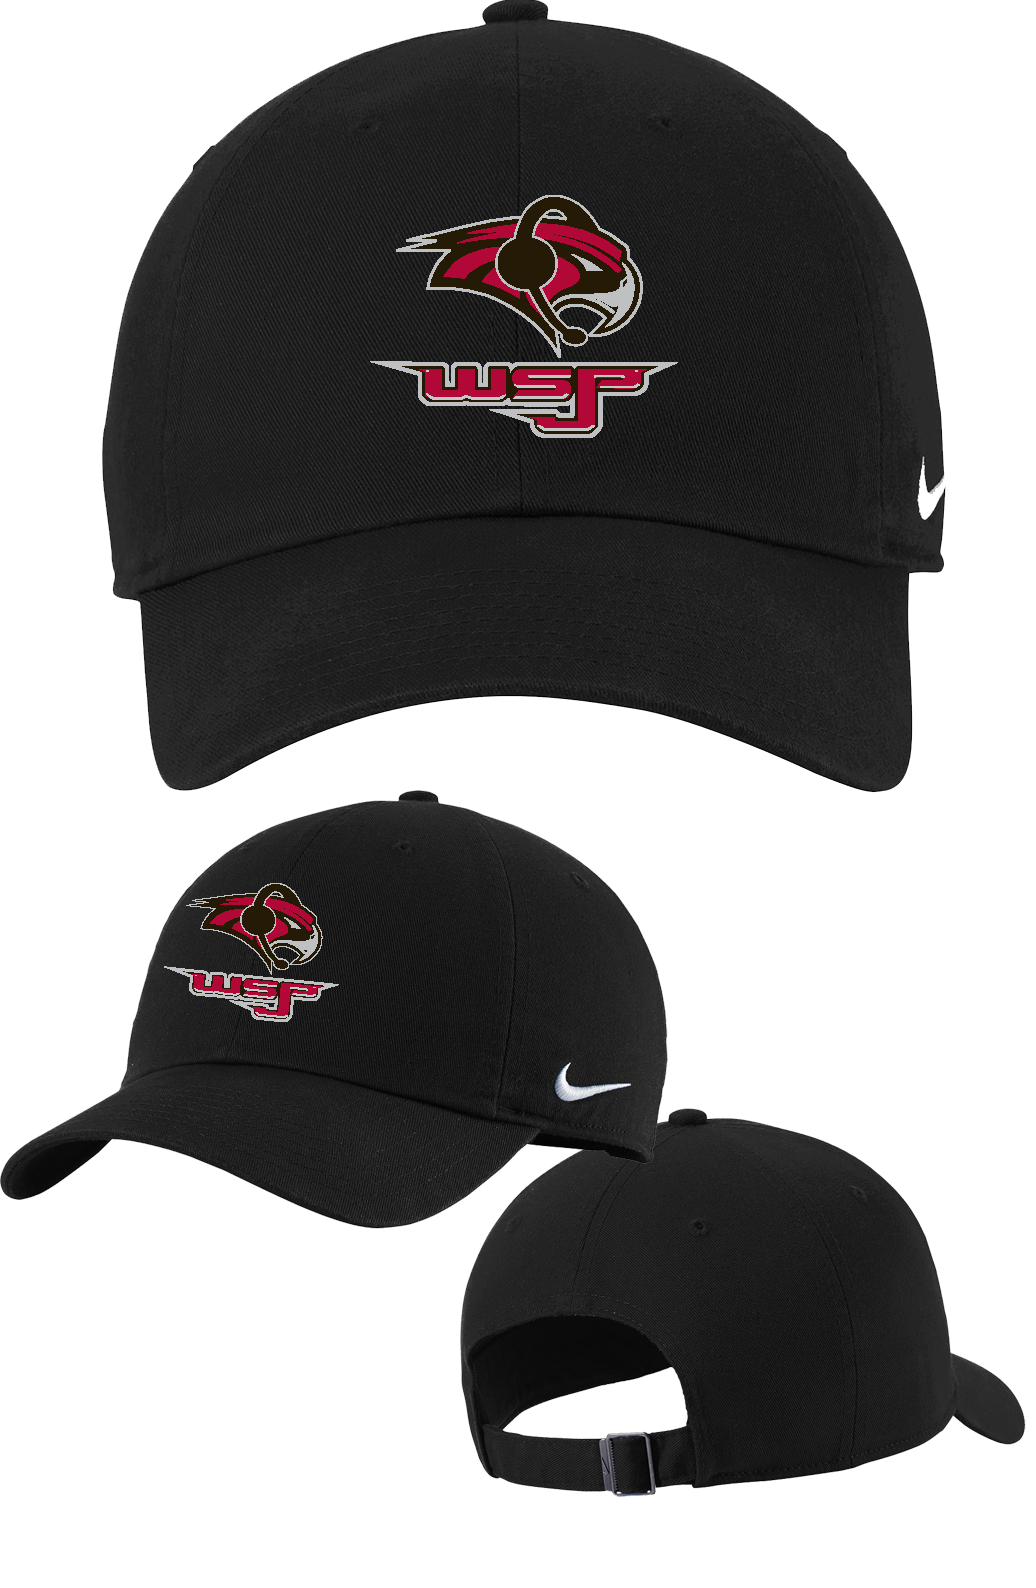 WSJP Nike Heritage 86 Cap -BLACK